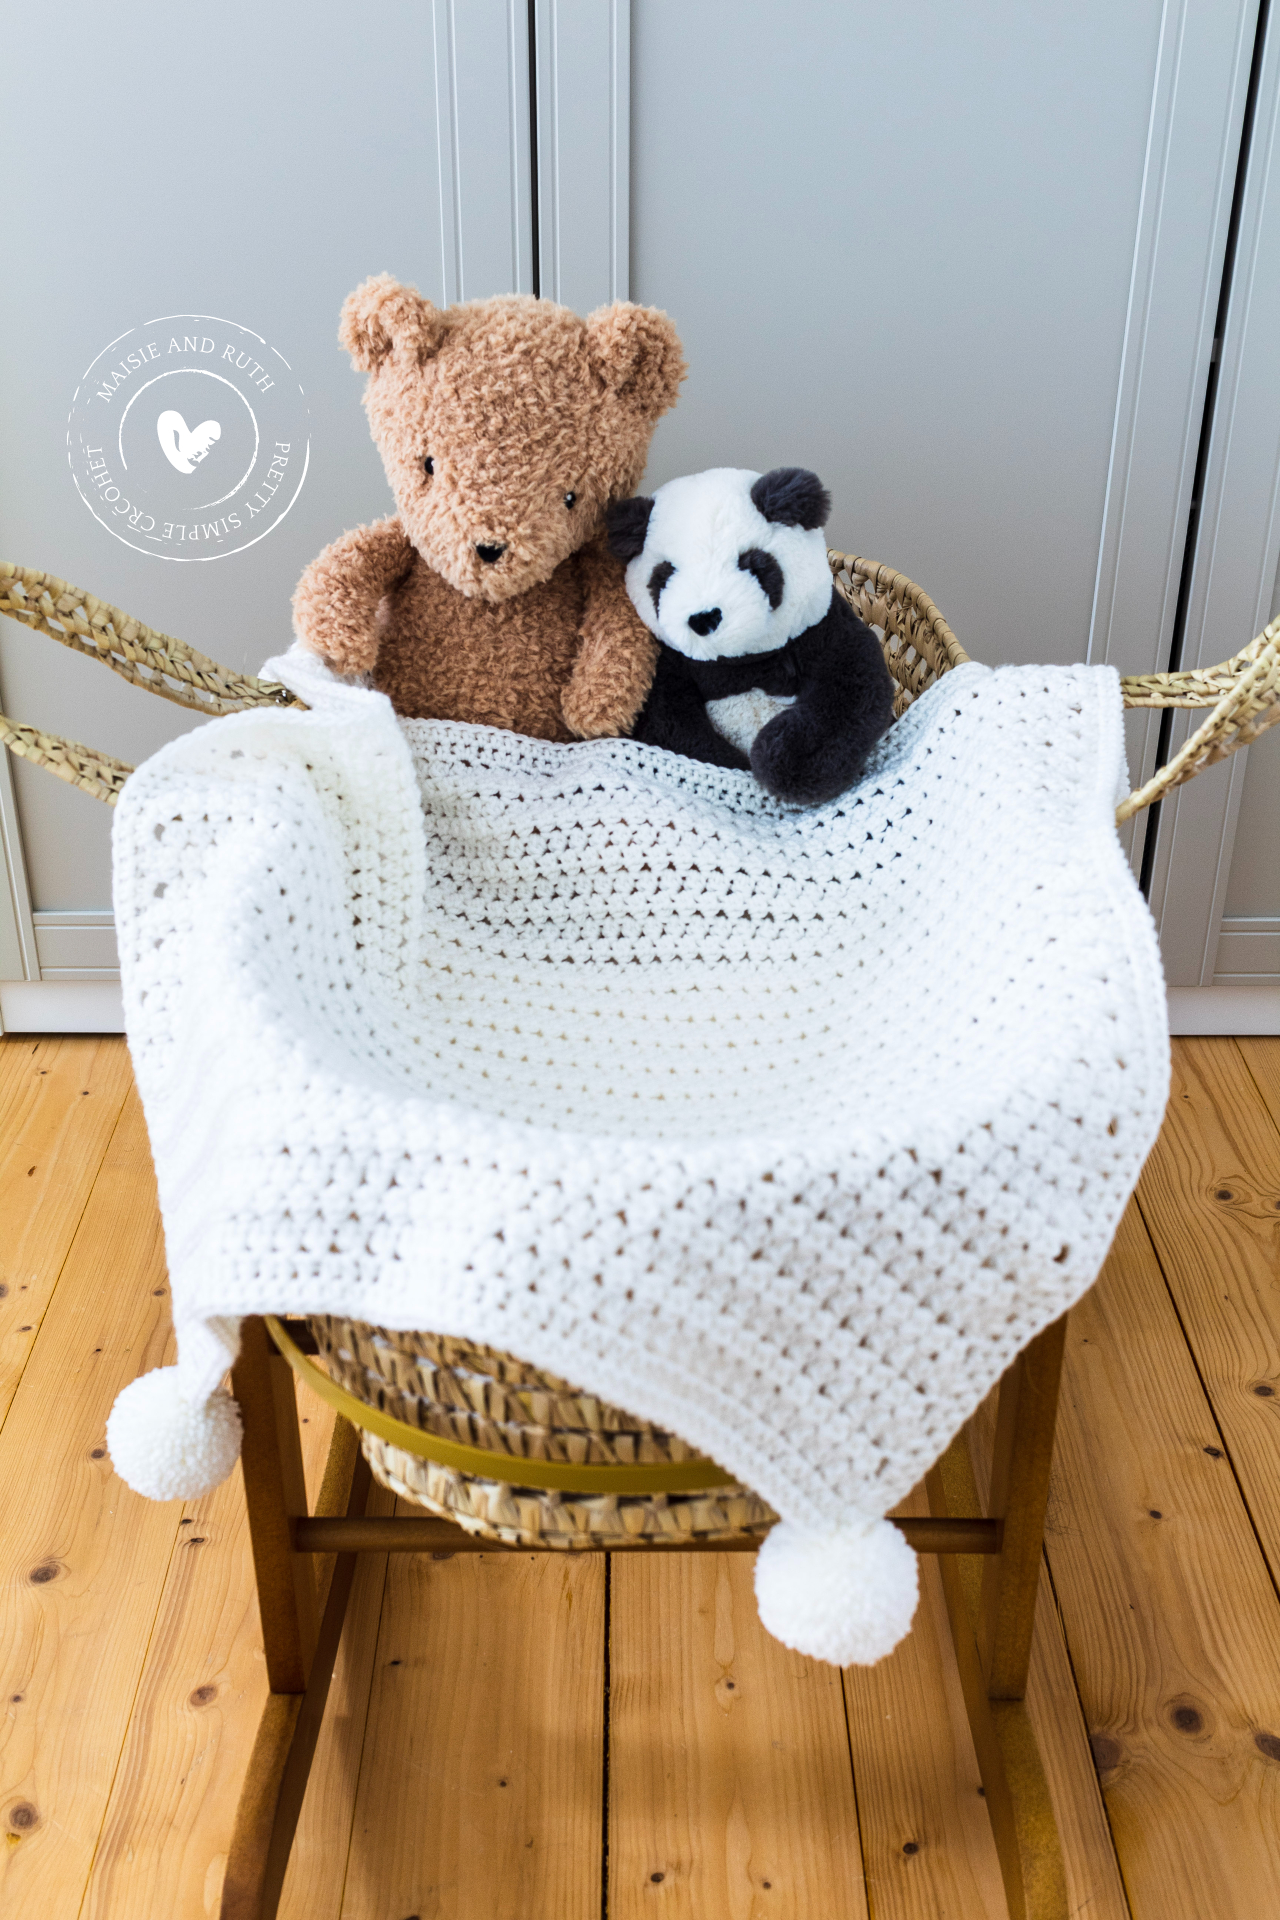 Crochet An Easy Baby Blanket with bear and panda in bassinett